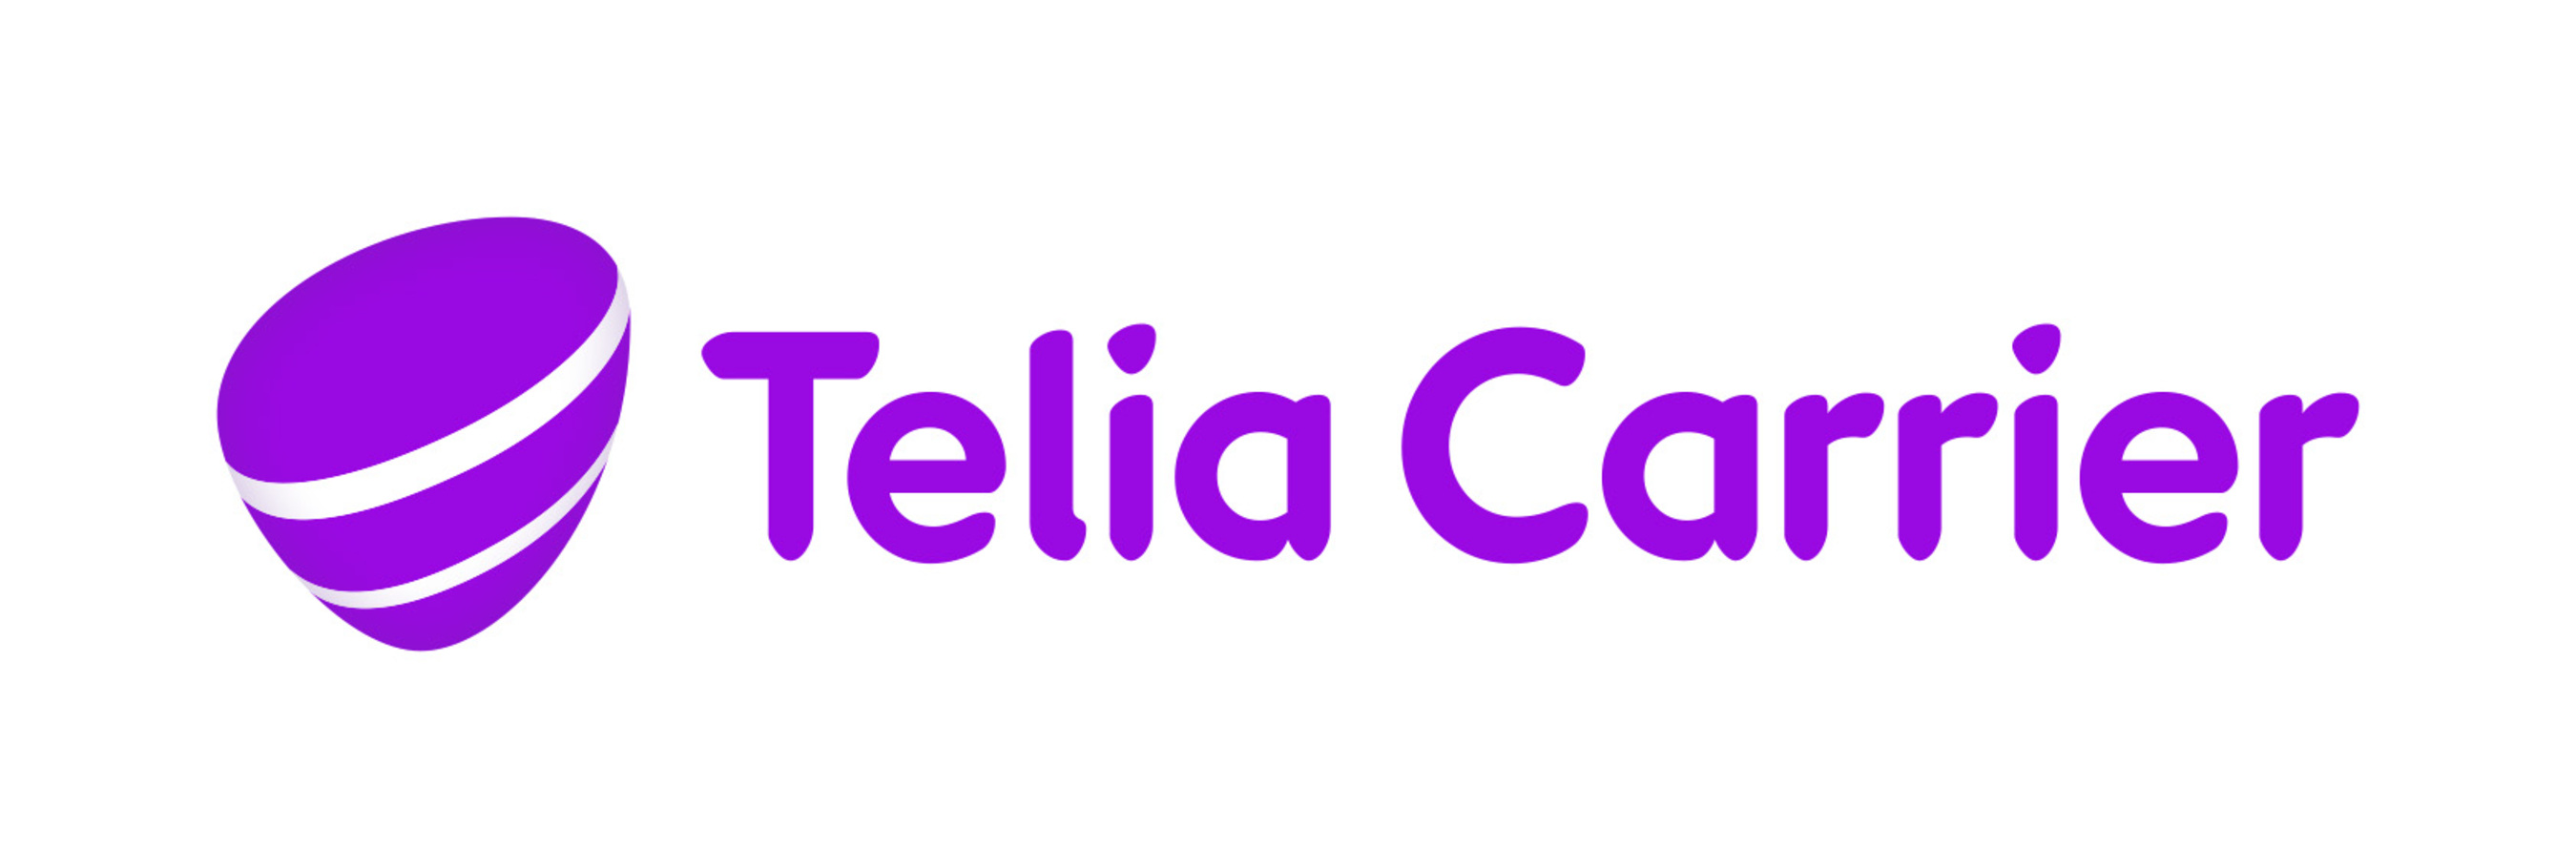 Telia Carrier logo (PRNewsFoto/Telia Carrier)